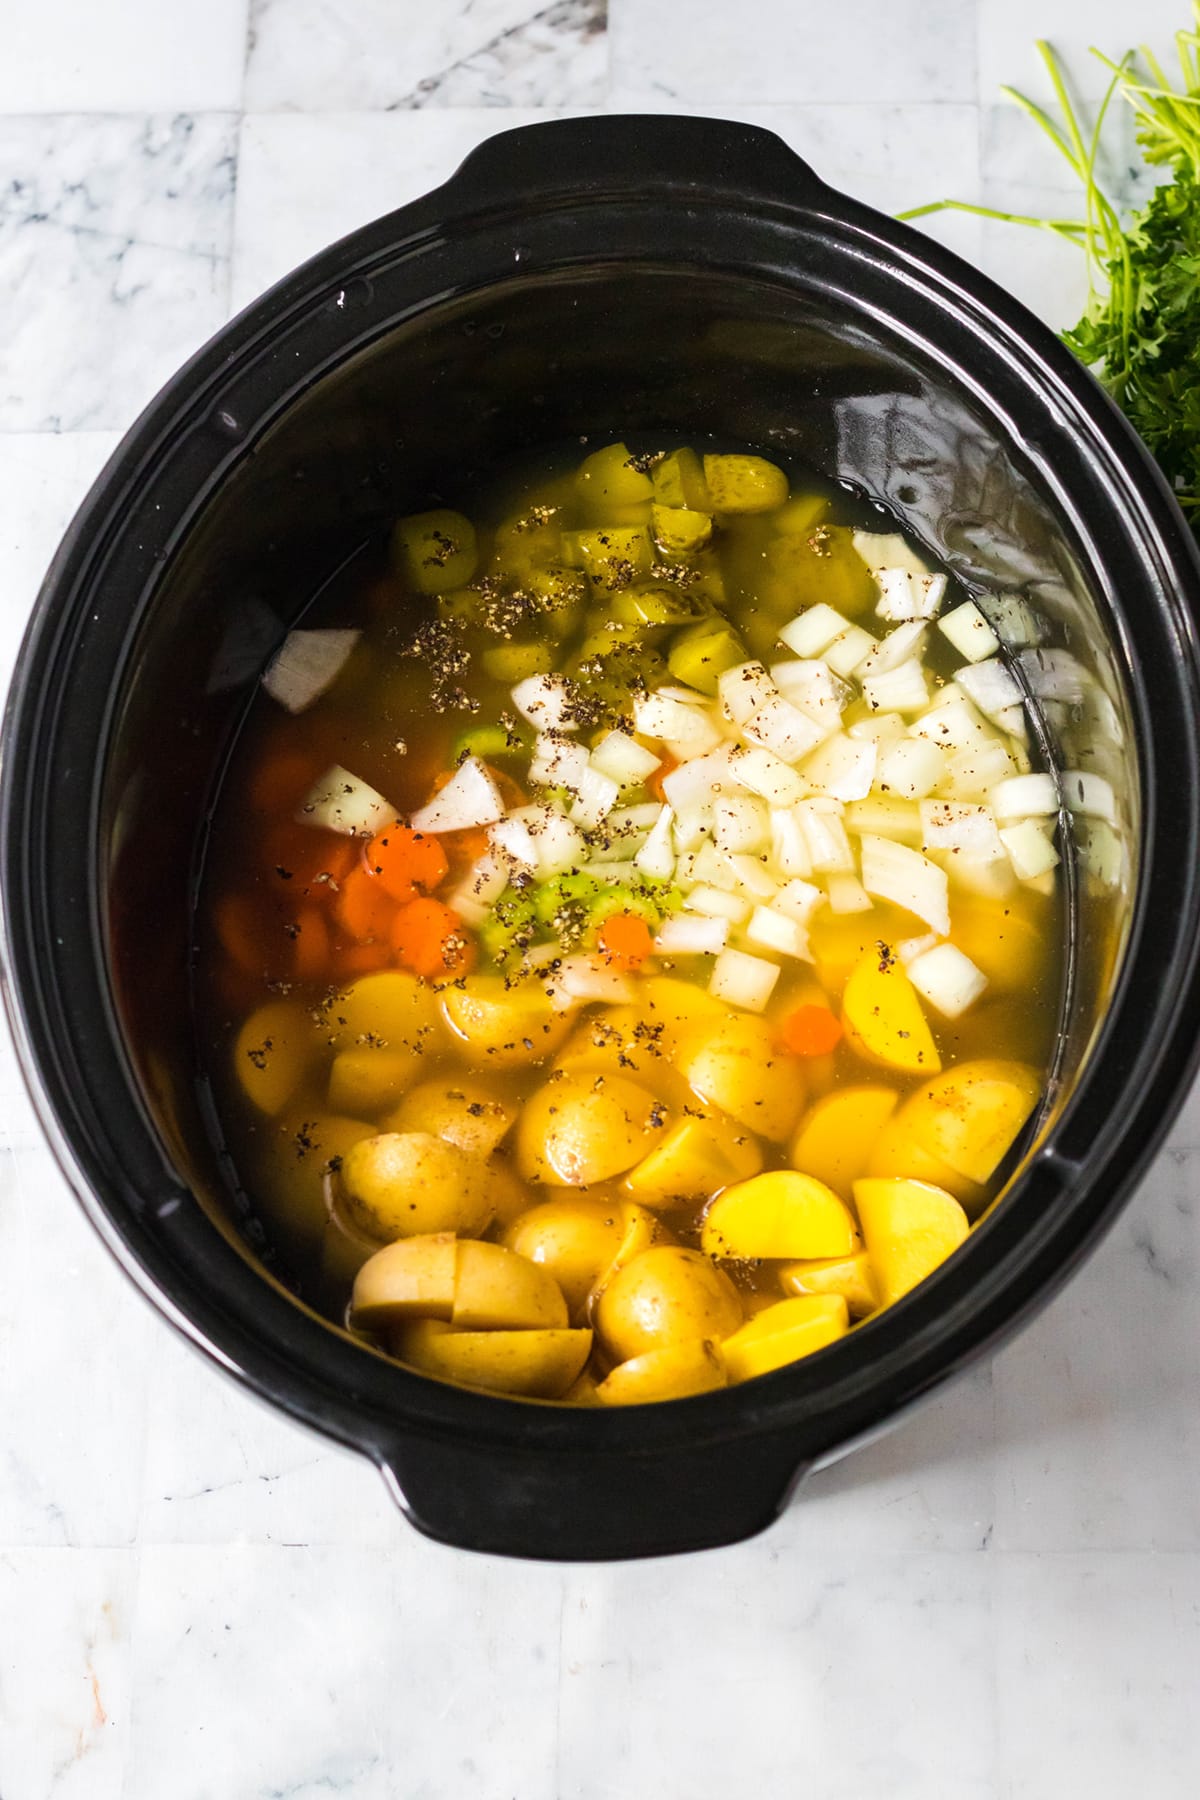 Salt and pepper are sprinkled over vegetables with pickle brine.